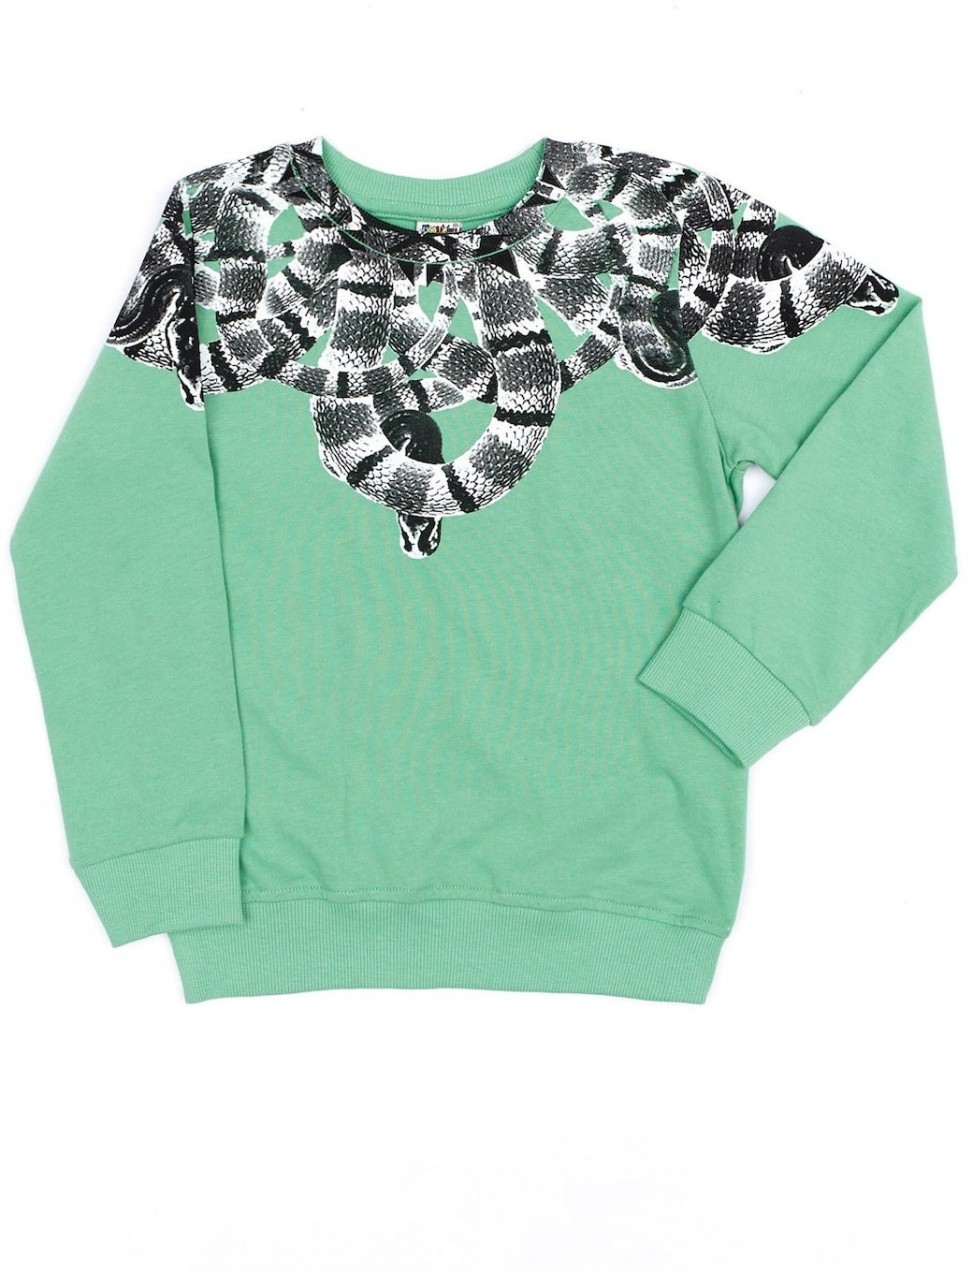 Boys´ green sweatshirt with print